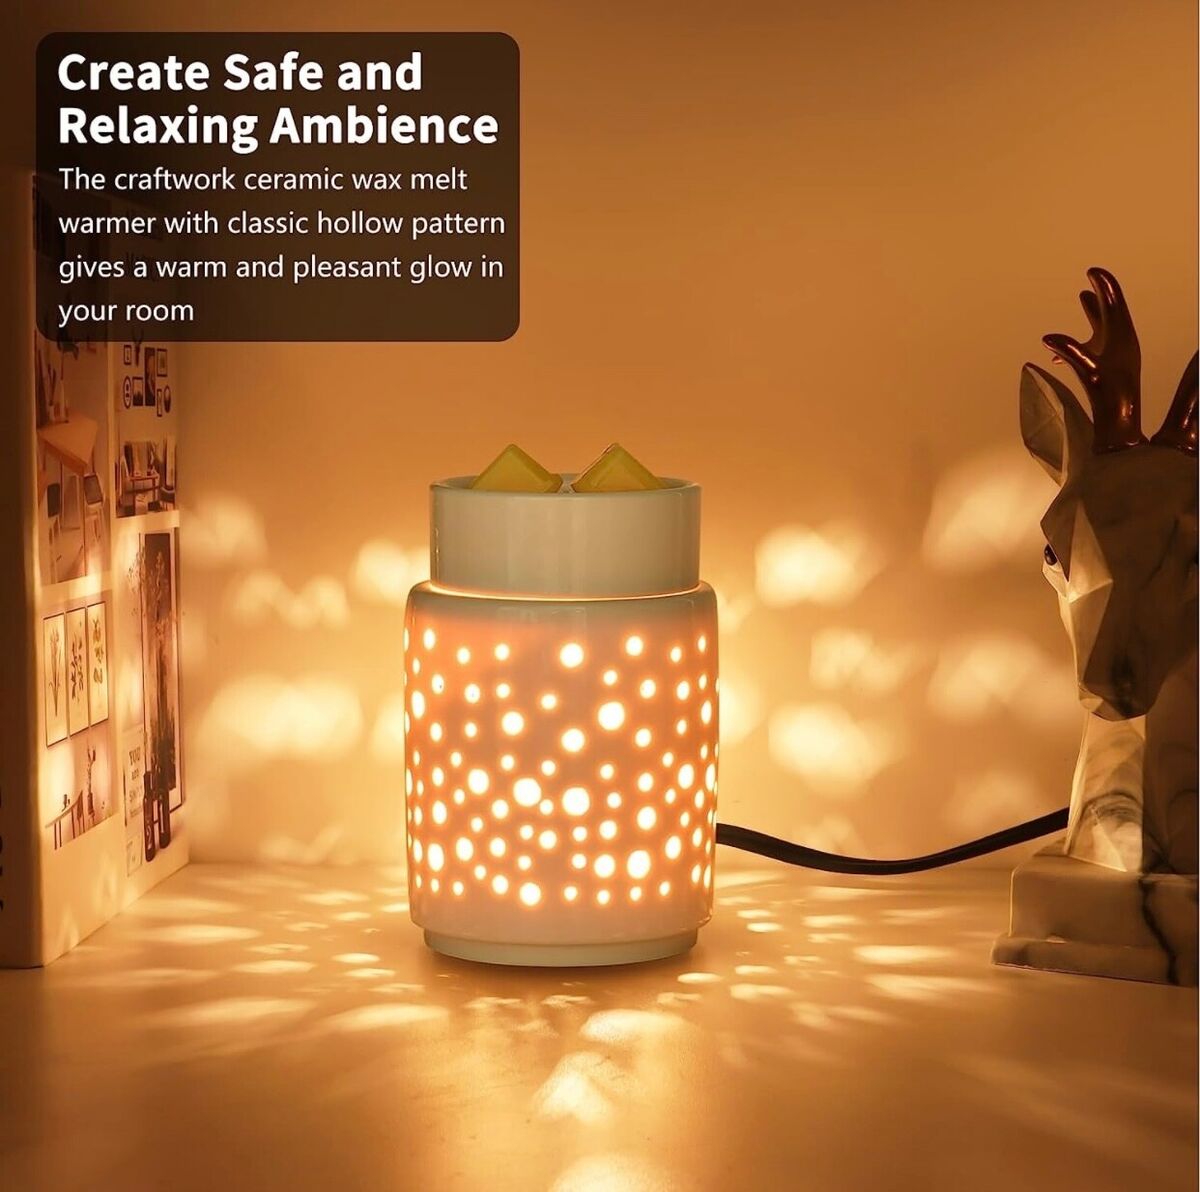 nawaza Ceramic Wax Melt Warmer,Candle Wax Warmer,2-in-1 Electric